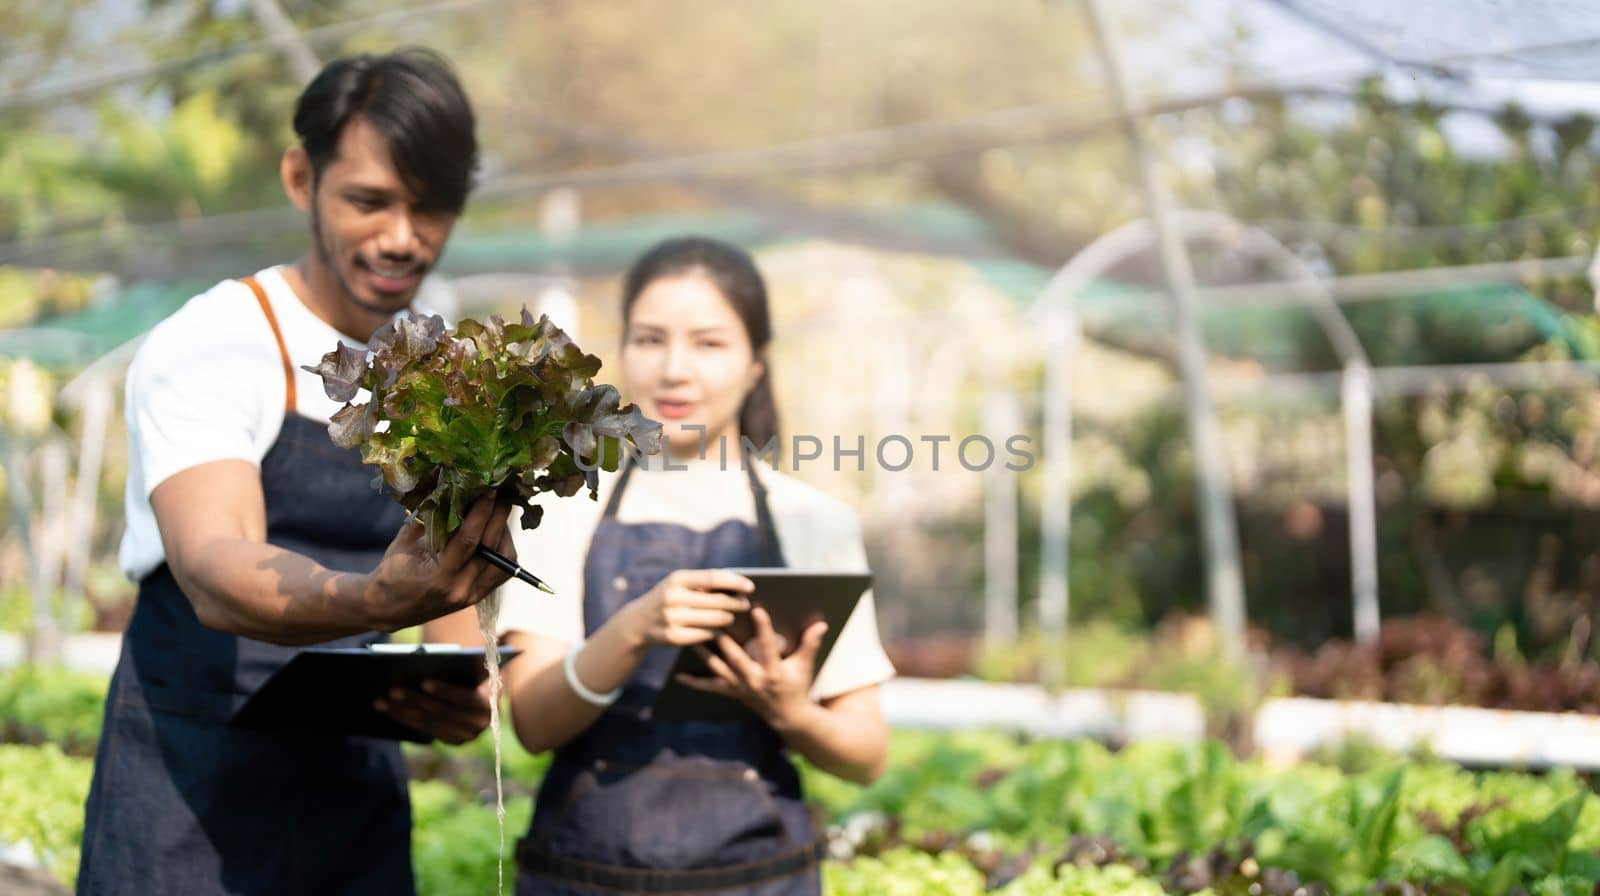 Gardener harvesting lettuce in garden. Team of Asian farmers working in garden. Man and woman using digital hydroponic technology.